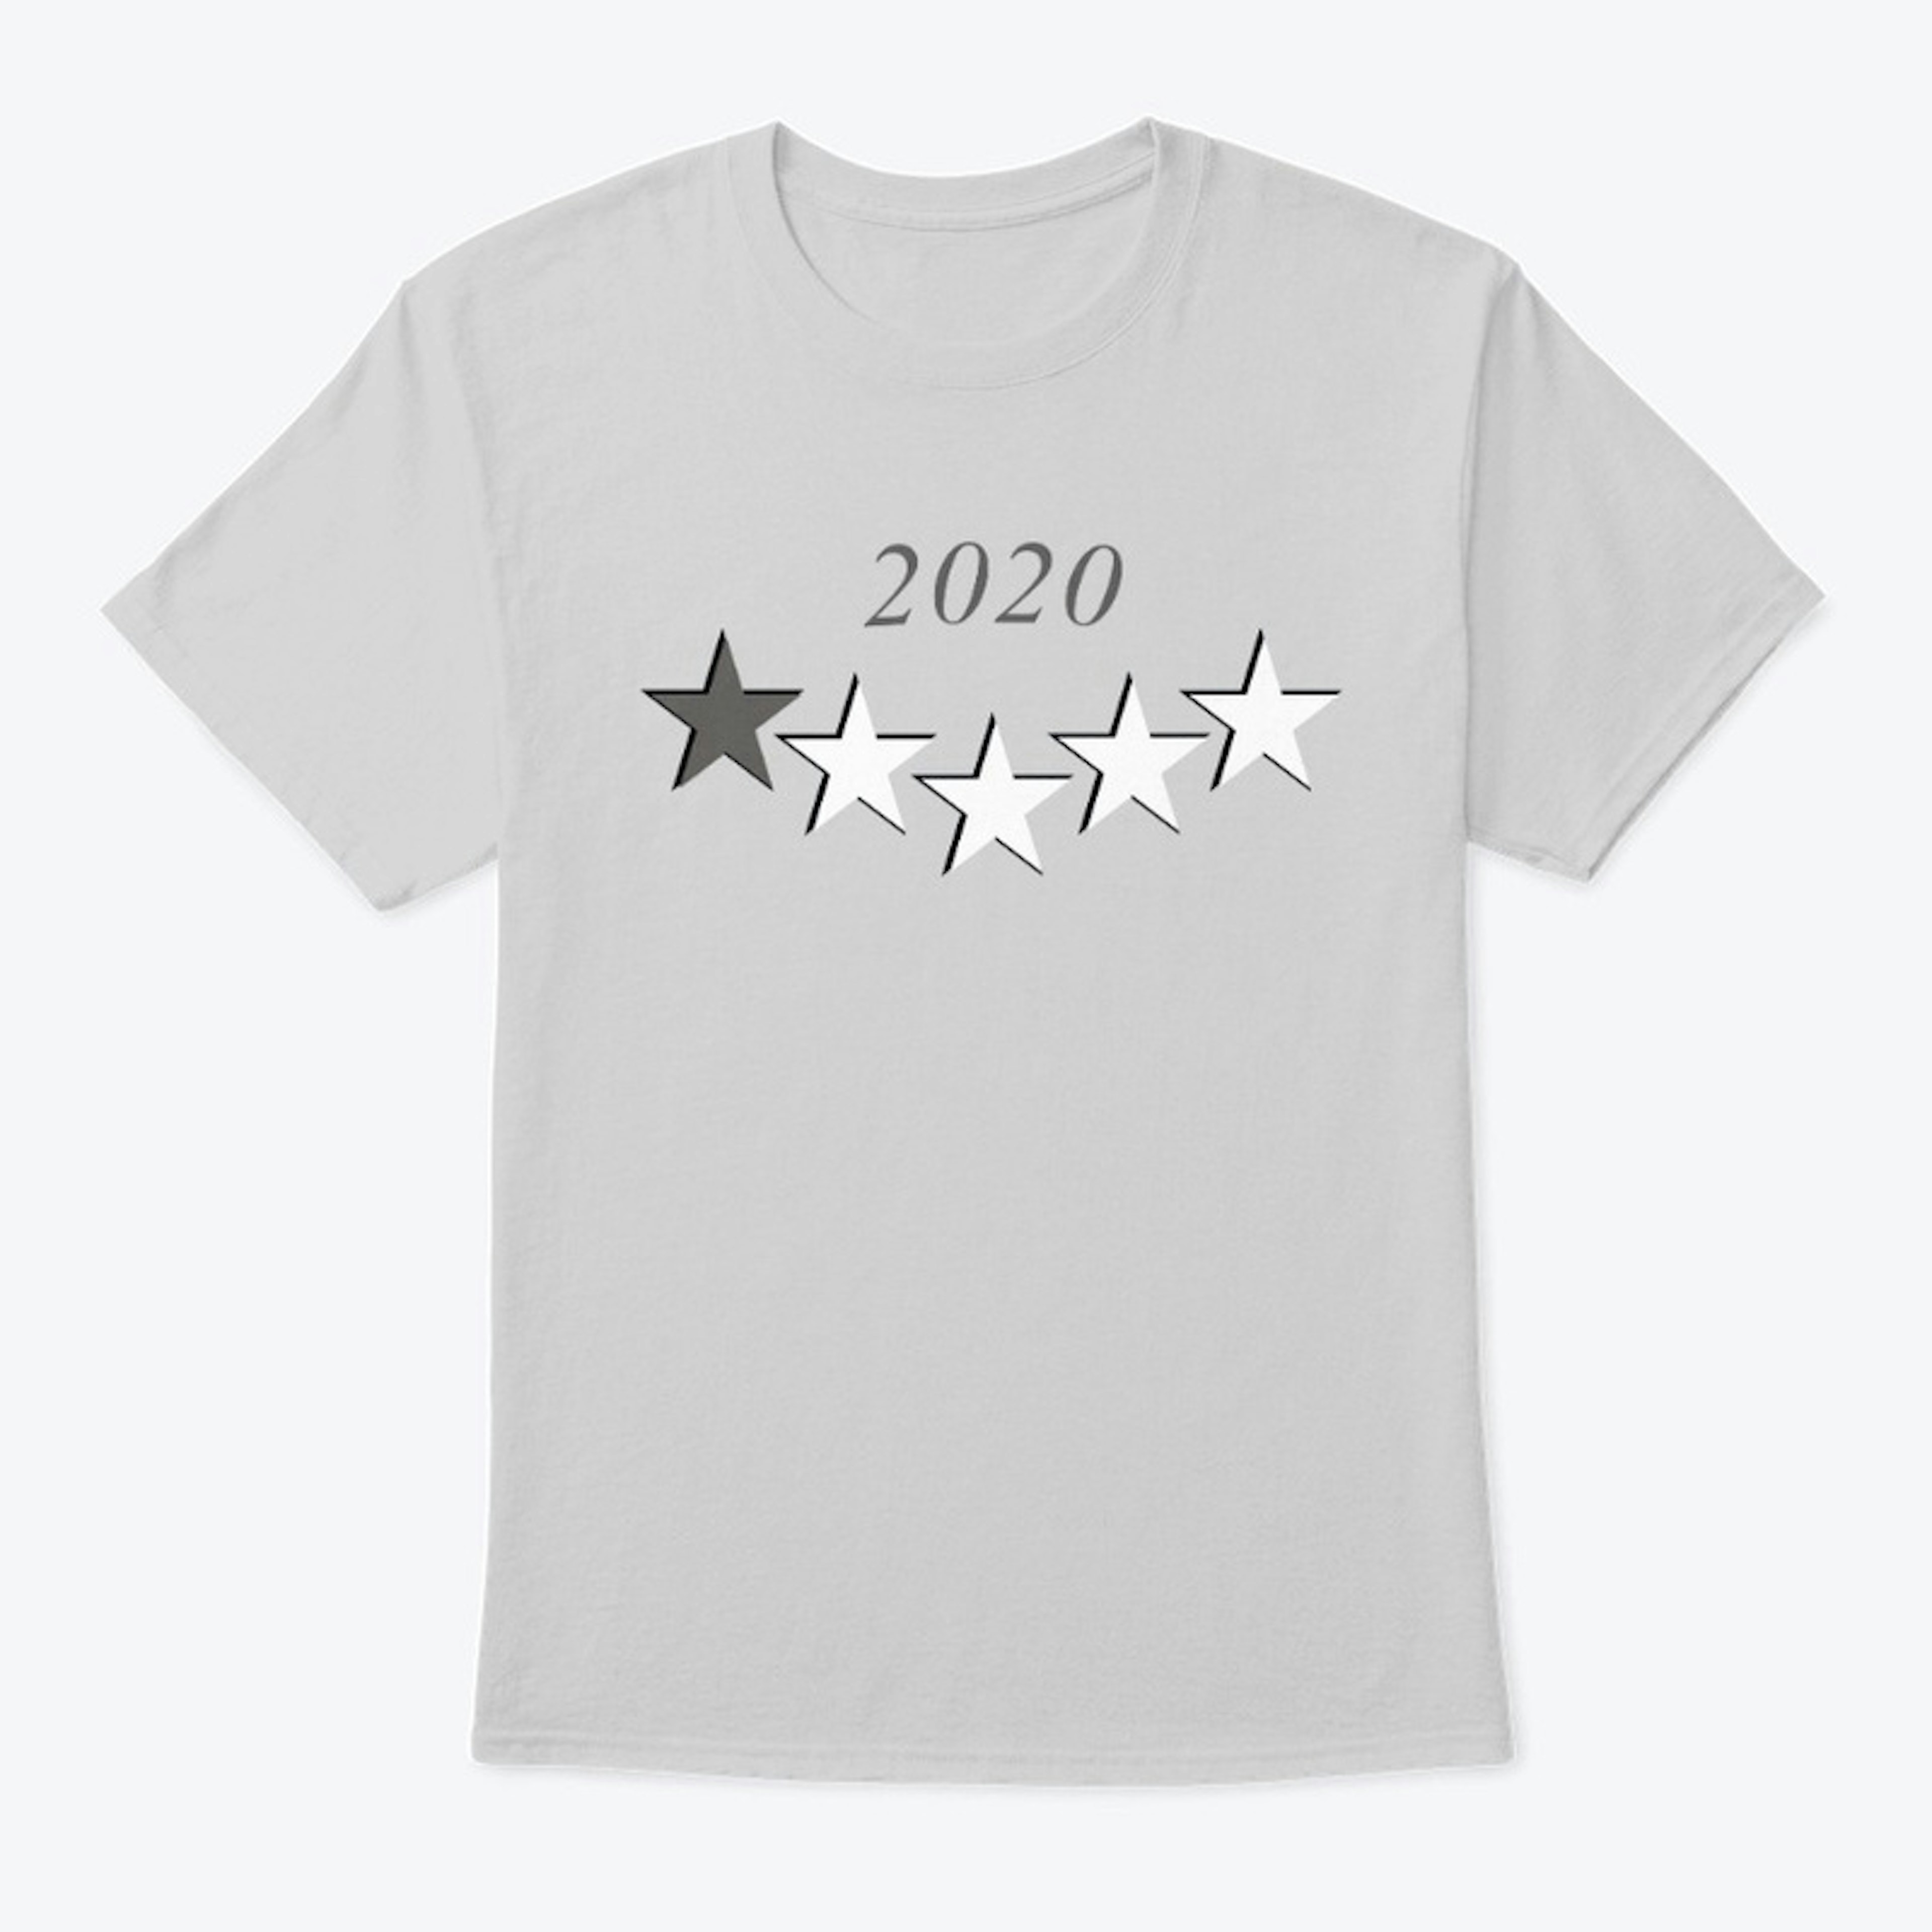 I Give 2020 One Star